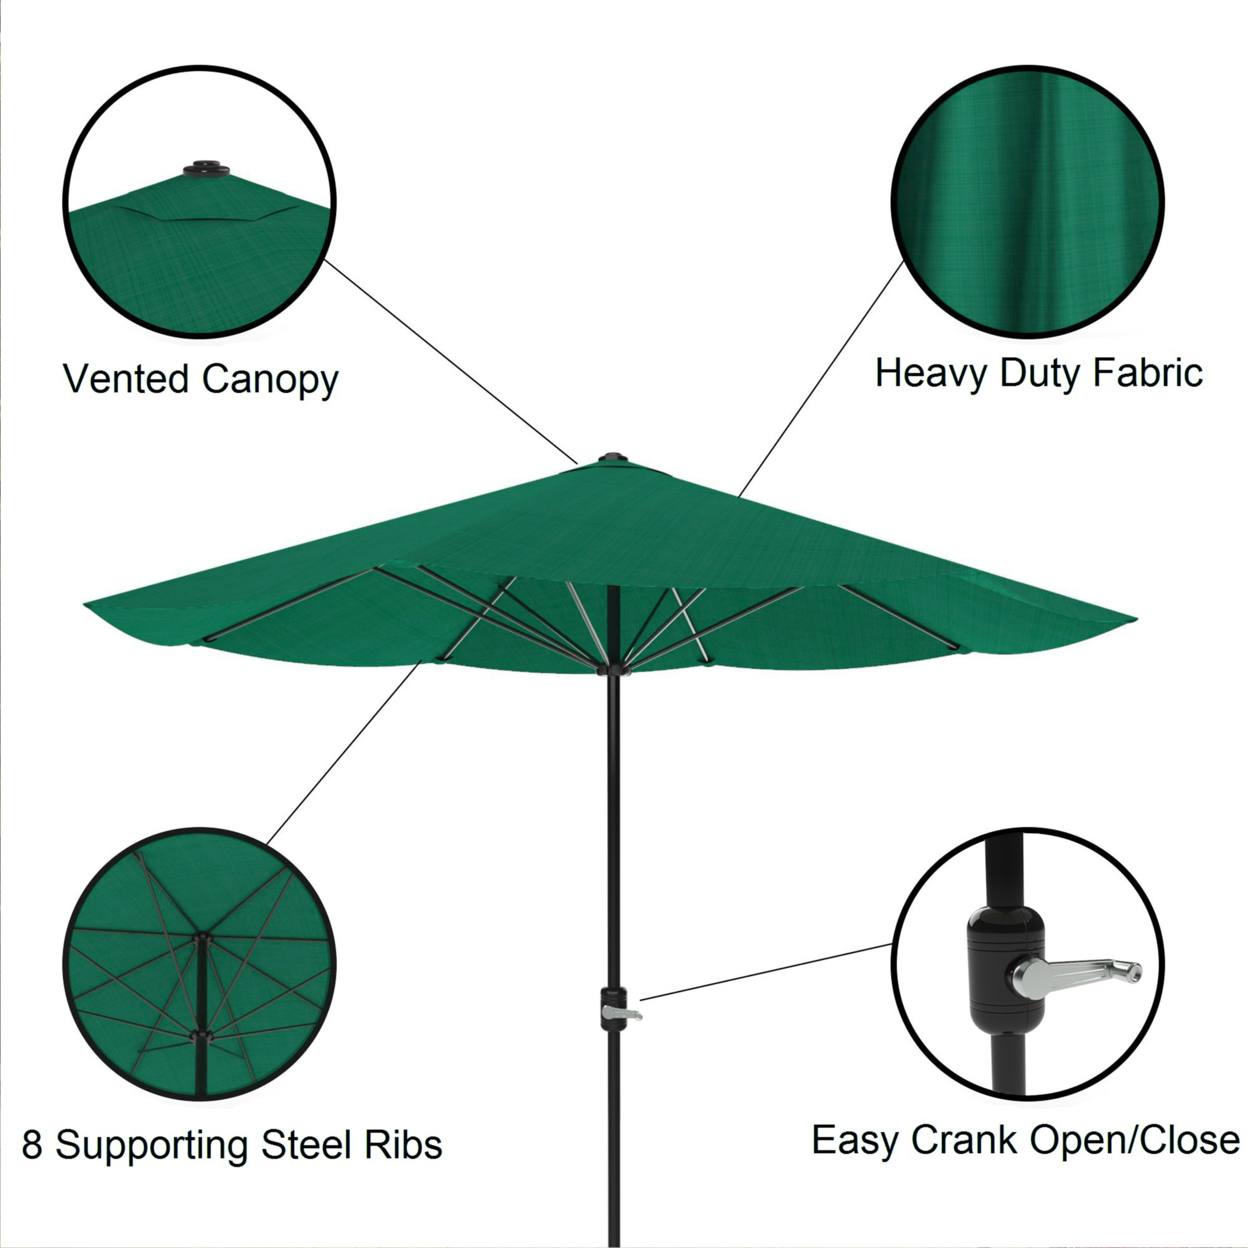 Patio Umbrella Outdoor Shade With Easy Crank- Table Umbrella For Deck Poolside Hunter Green